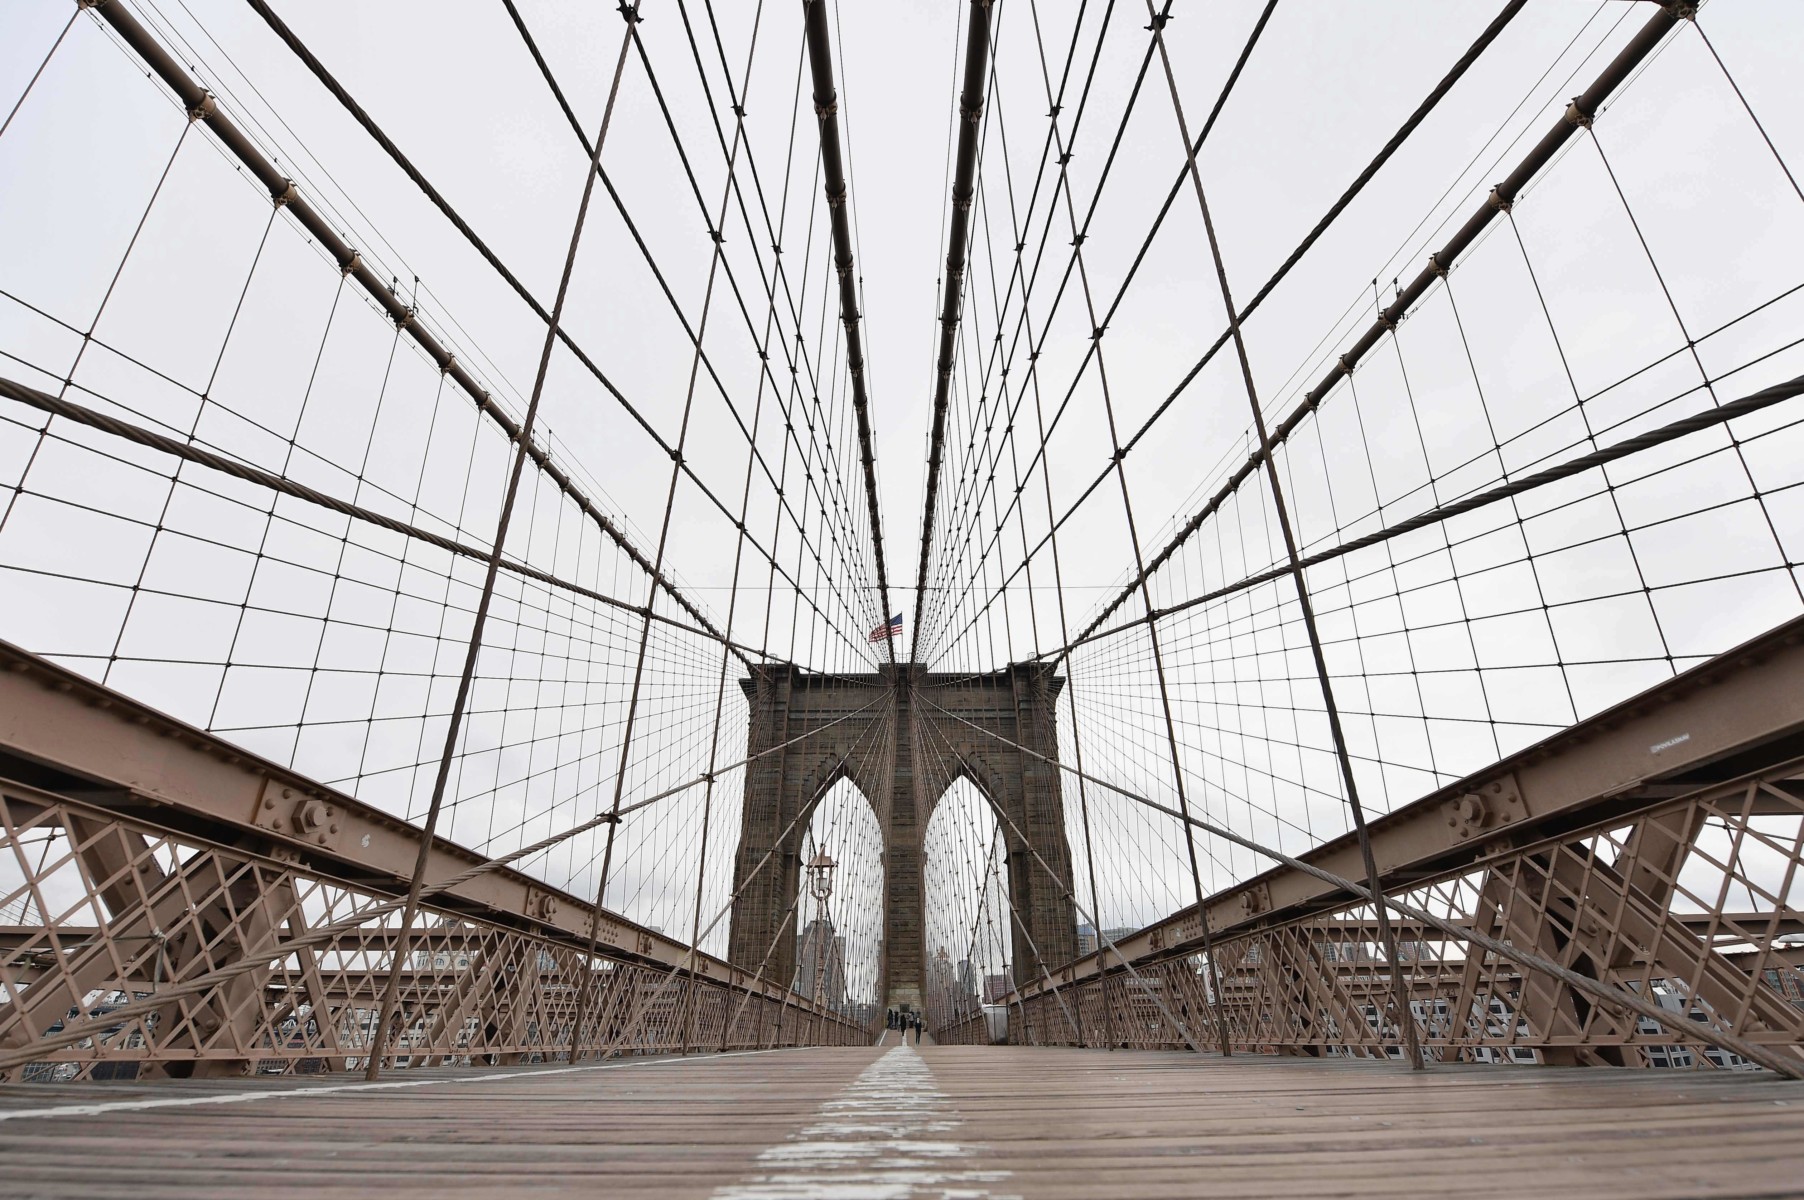 New York City's Brooklyn Bridge is empty